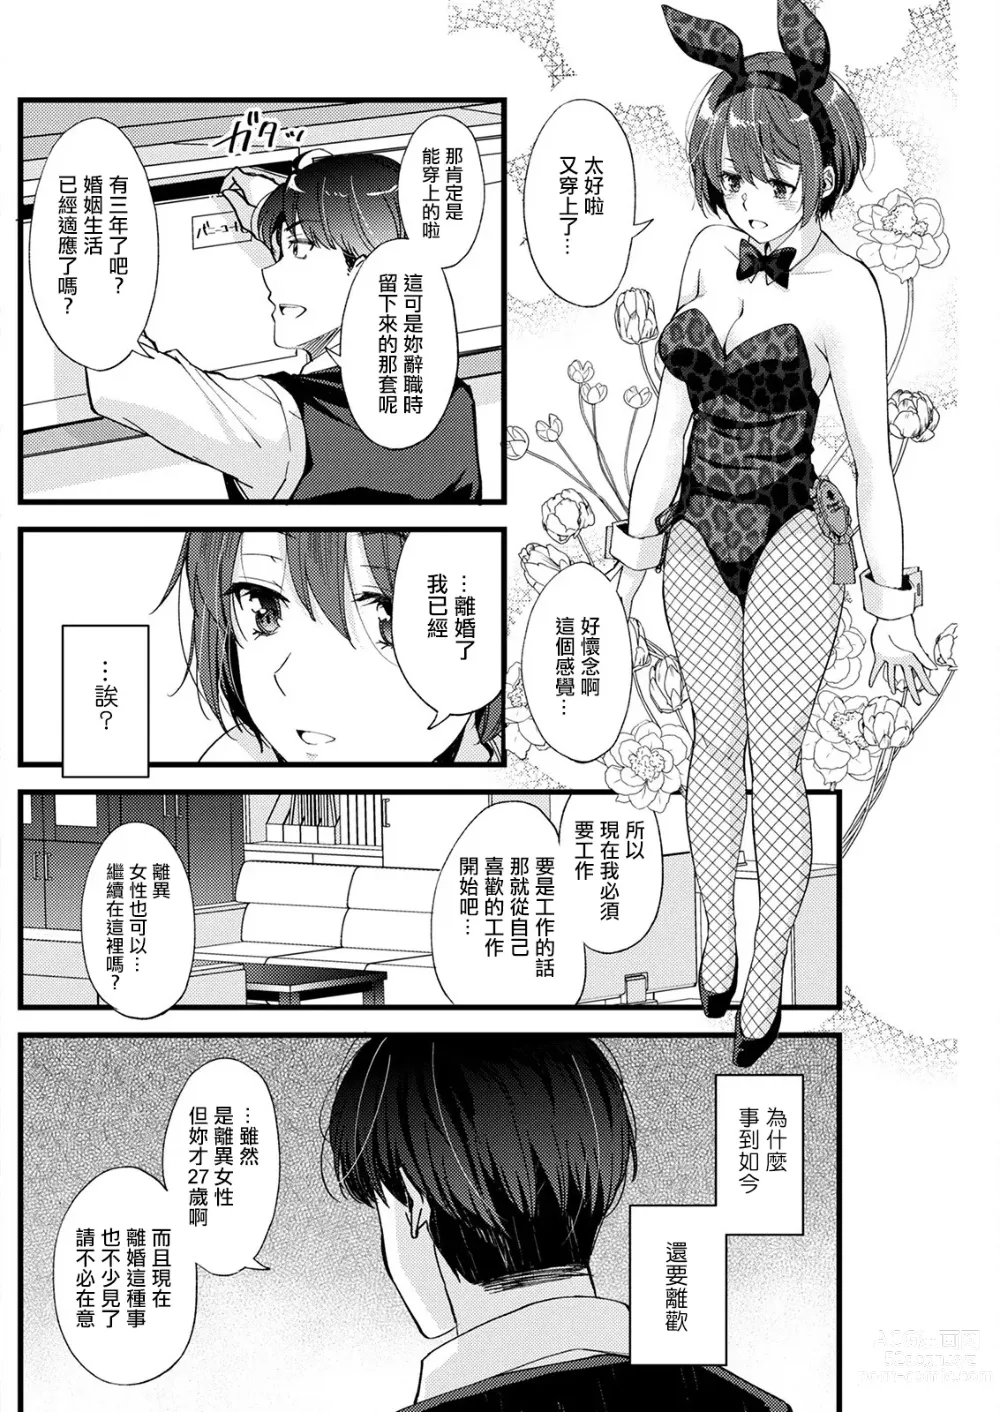 Page 2 of manga Tadaima tte Iwasete